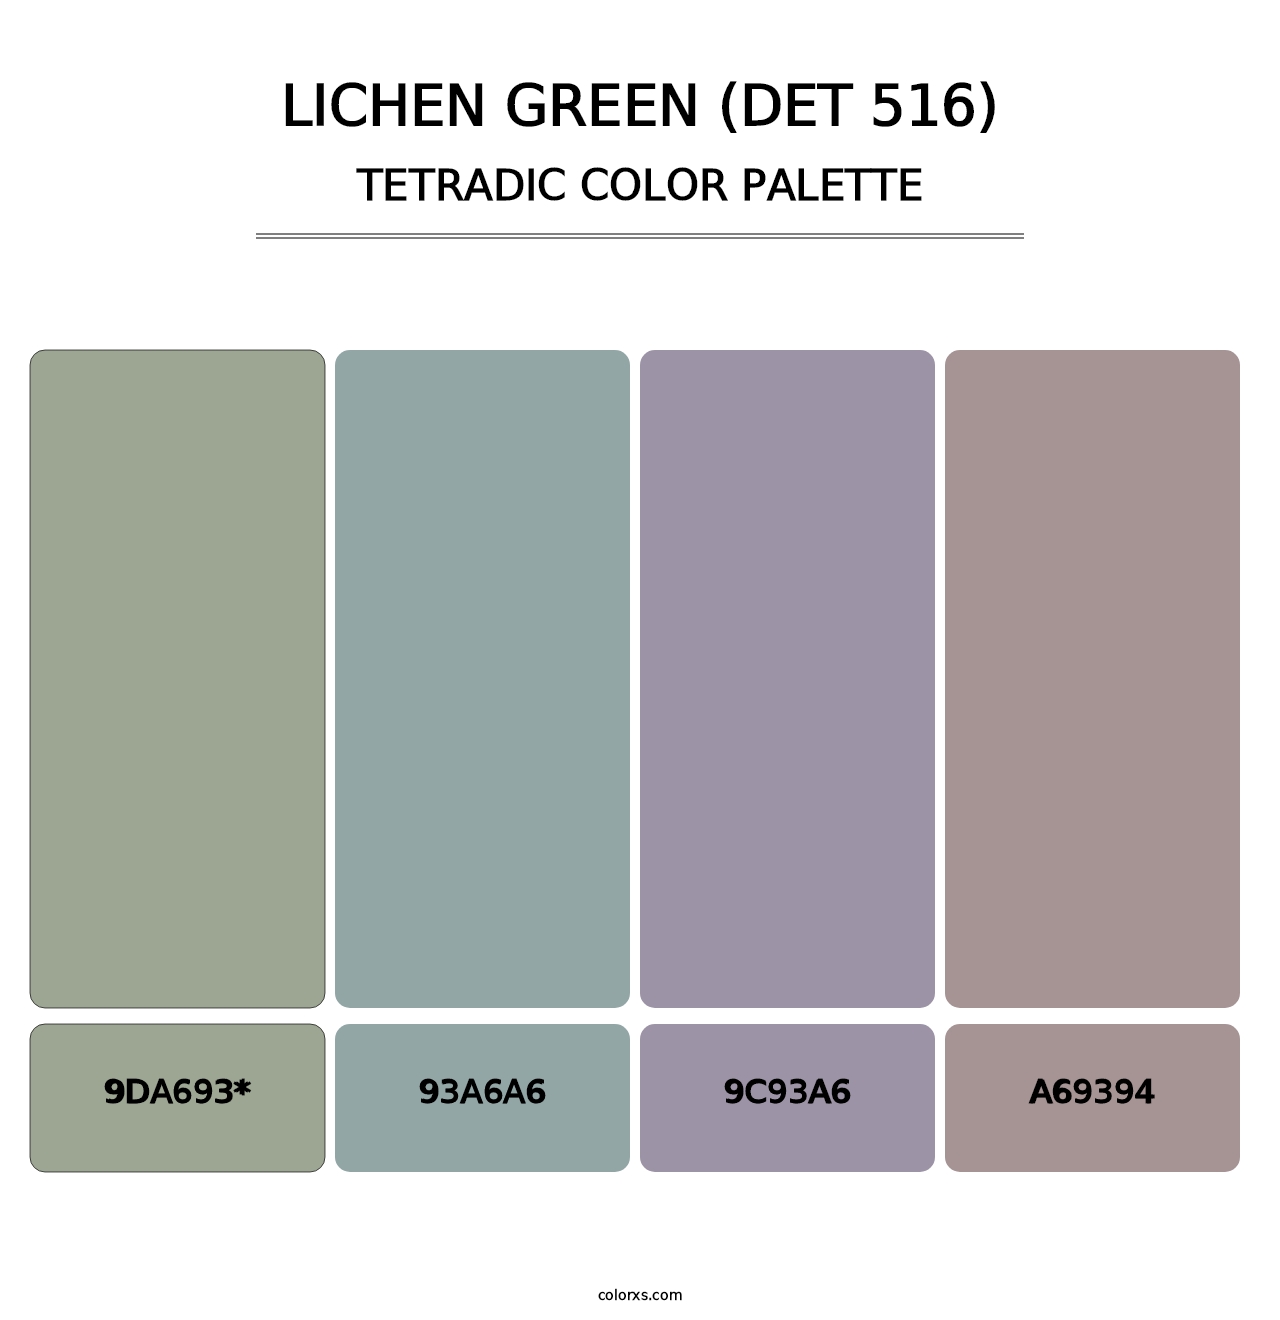 Lichen Green (DET 516) - Tetradic Color Palette